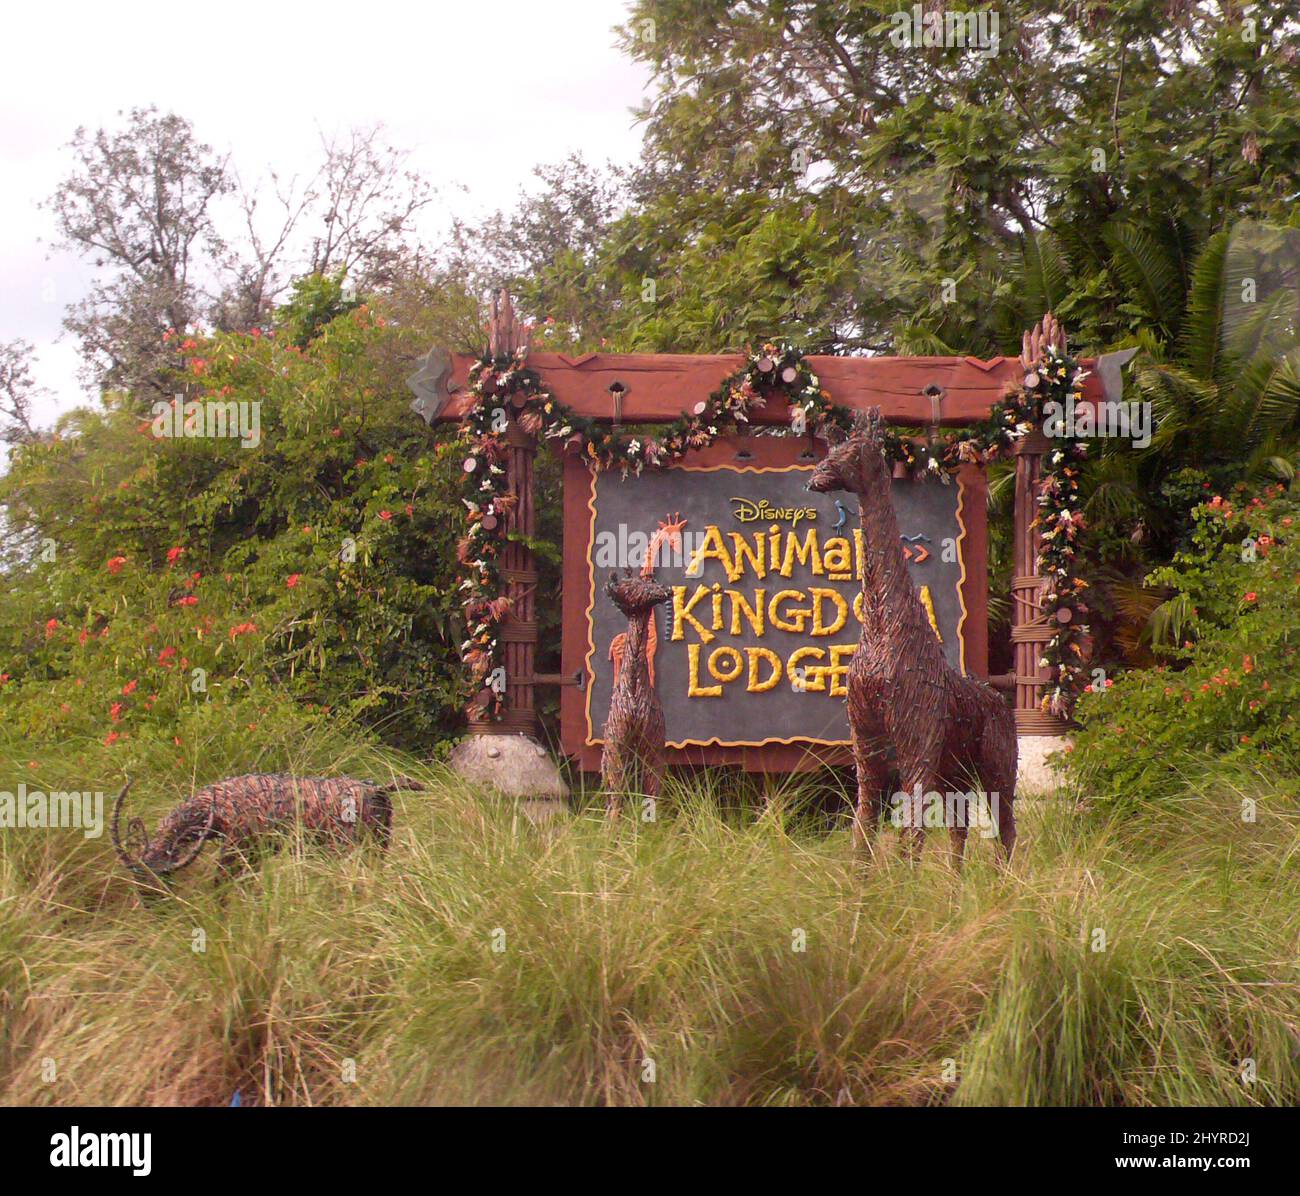 Disney's Animal Kingdom Lodge at Walt Disney World in Orlando, Florida. Stock Photo